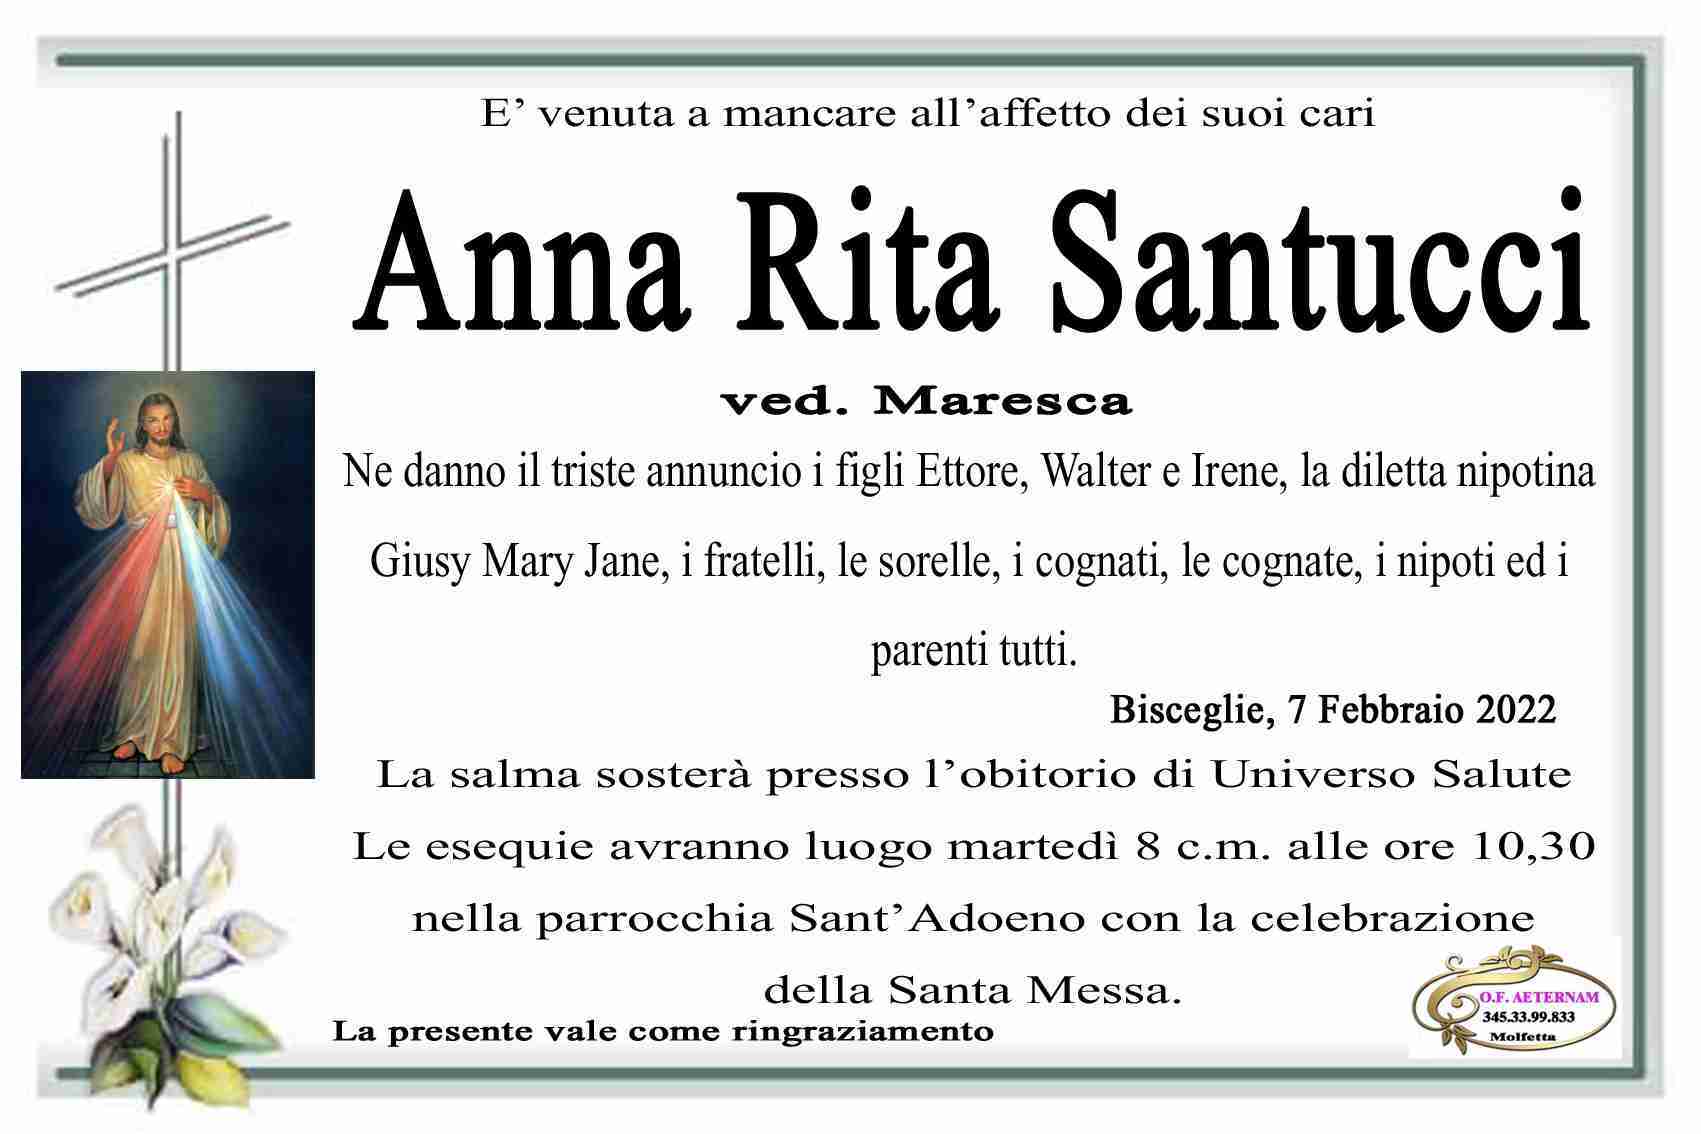 Anna Rita Santucci